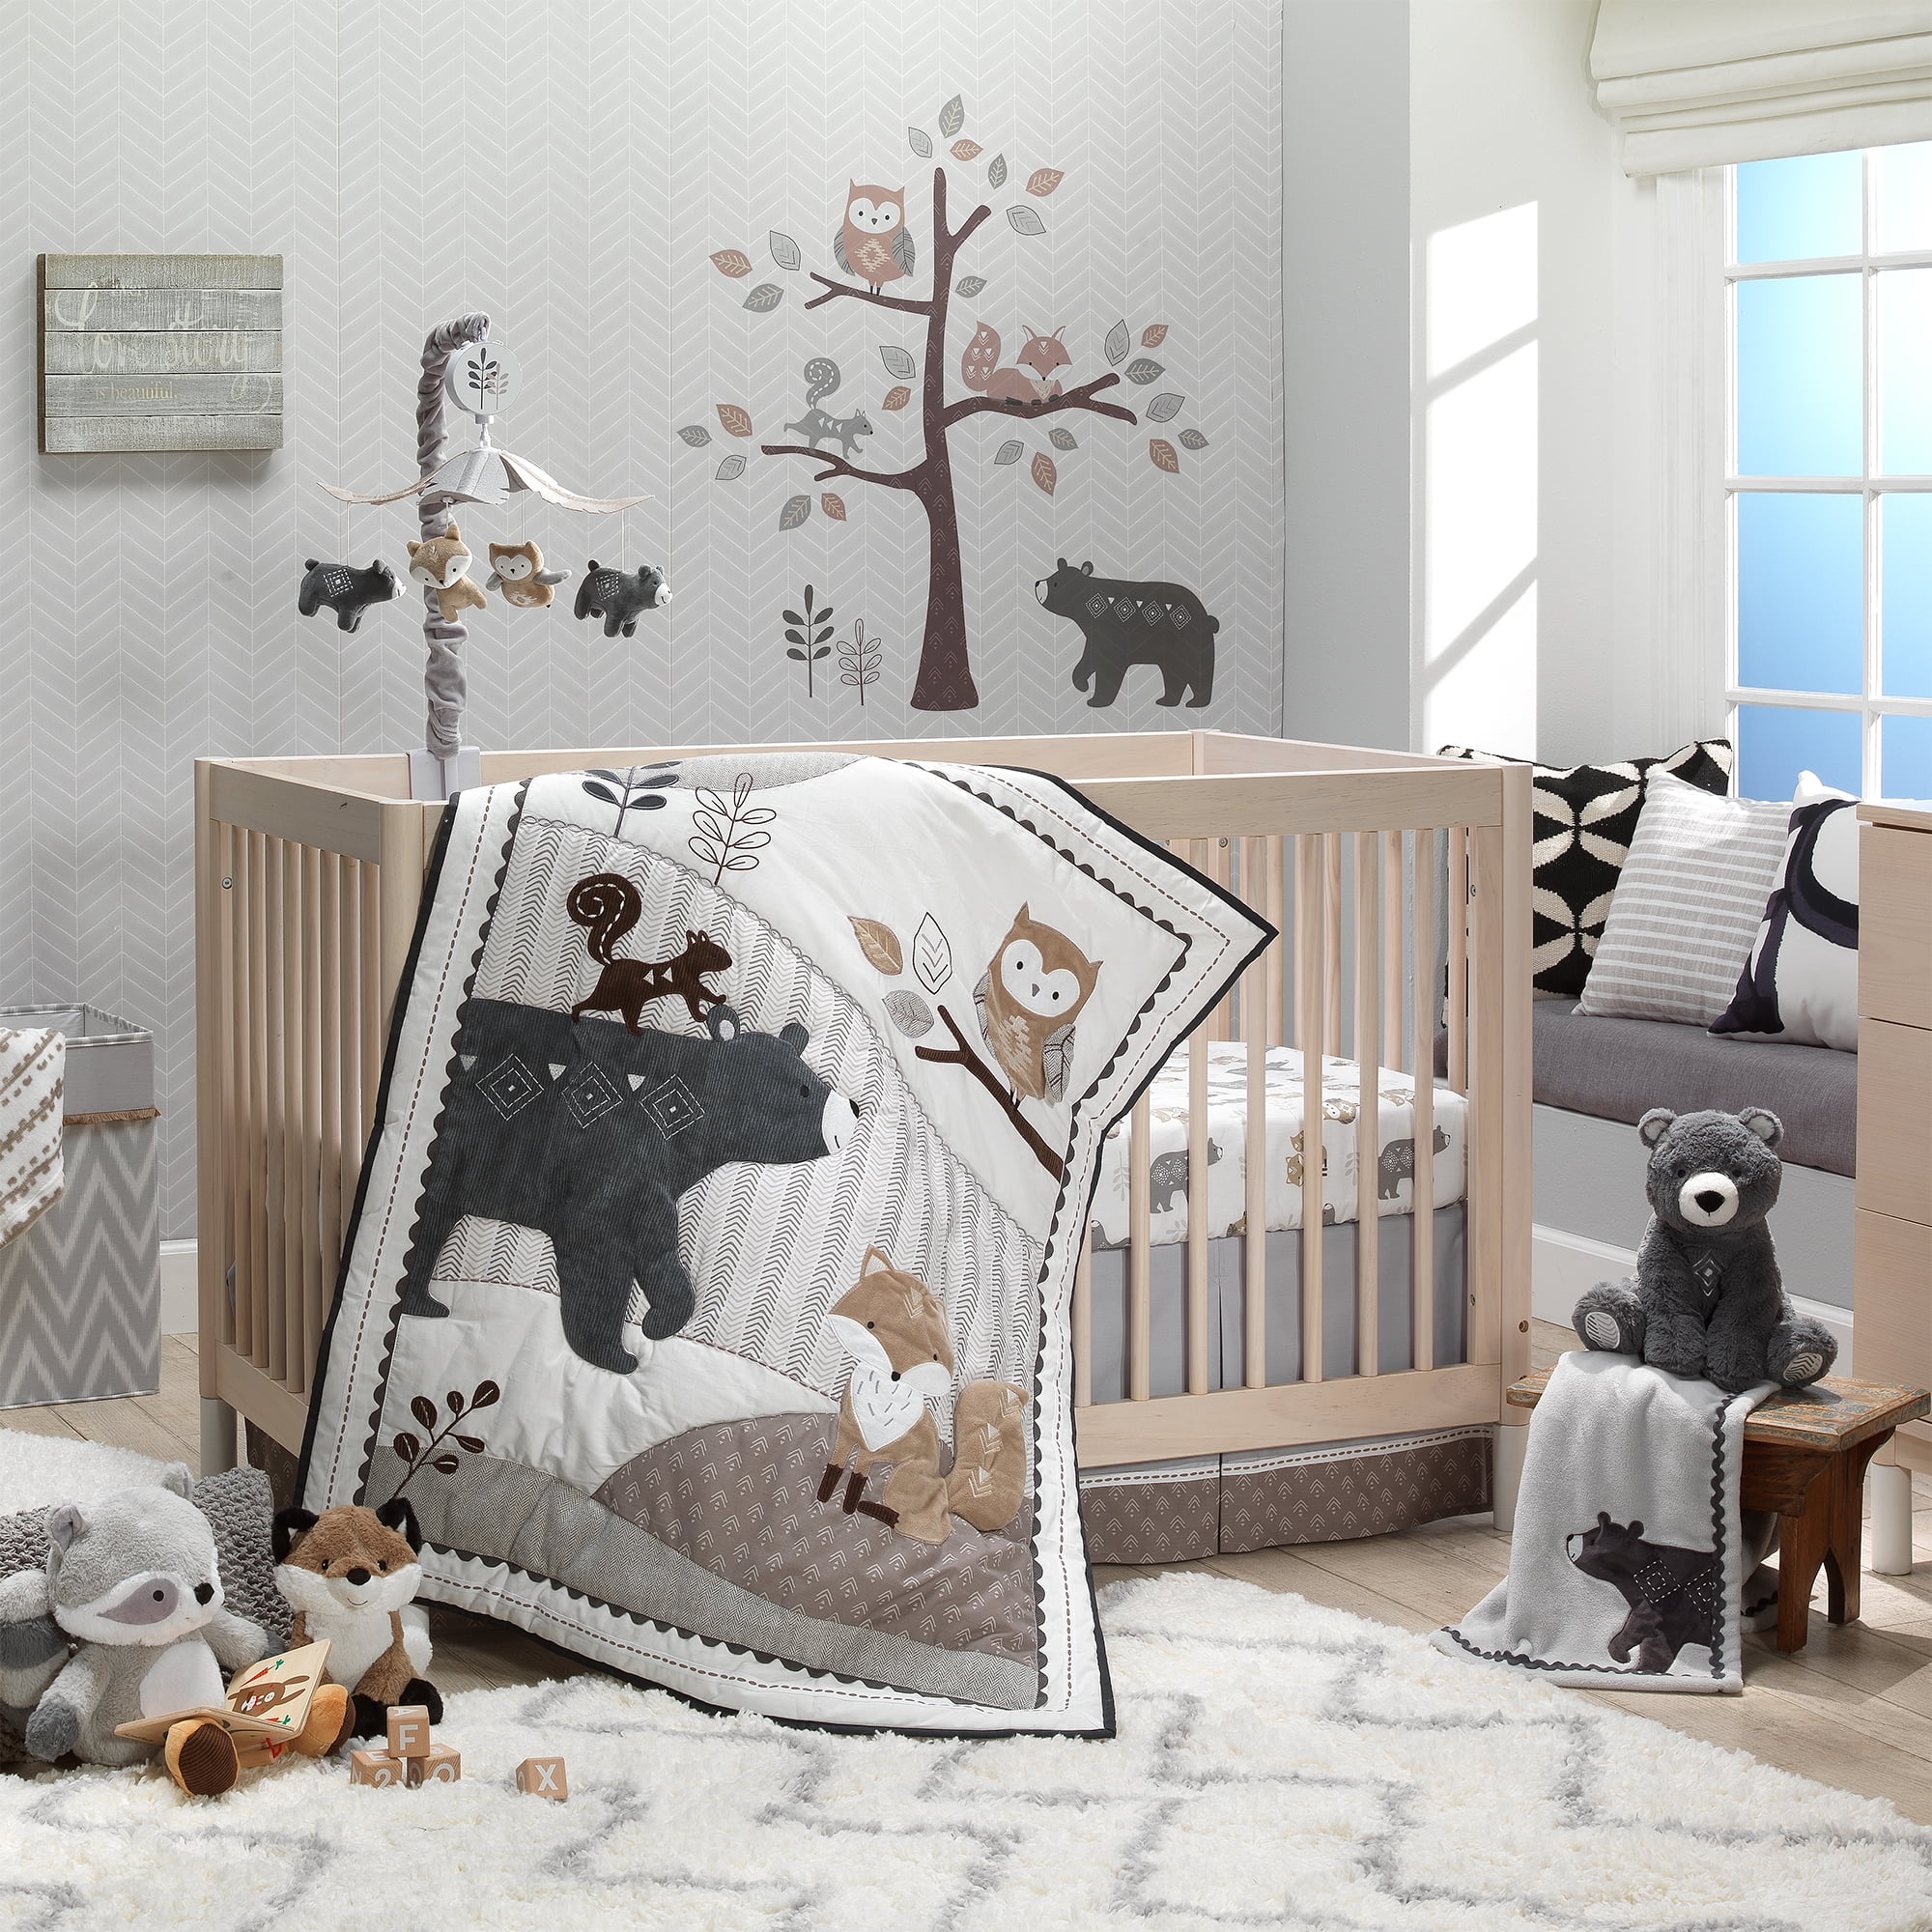 Lambs & Ivy Disney Minnie Mouse Baby Nursery Crib Bedding CHOOSE 4 5 6 7 PC Set 